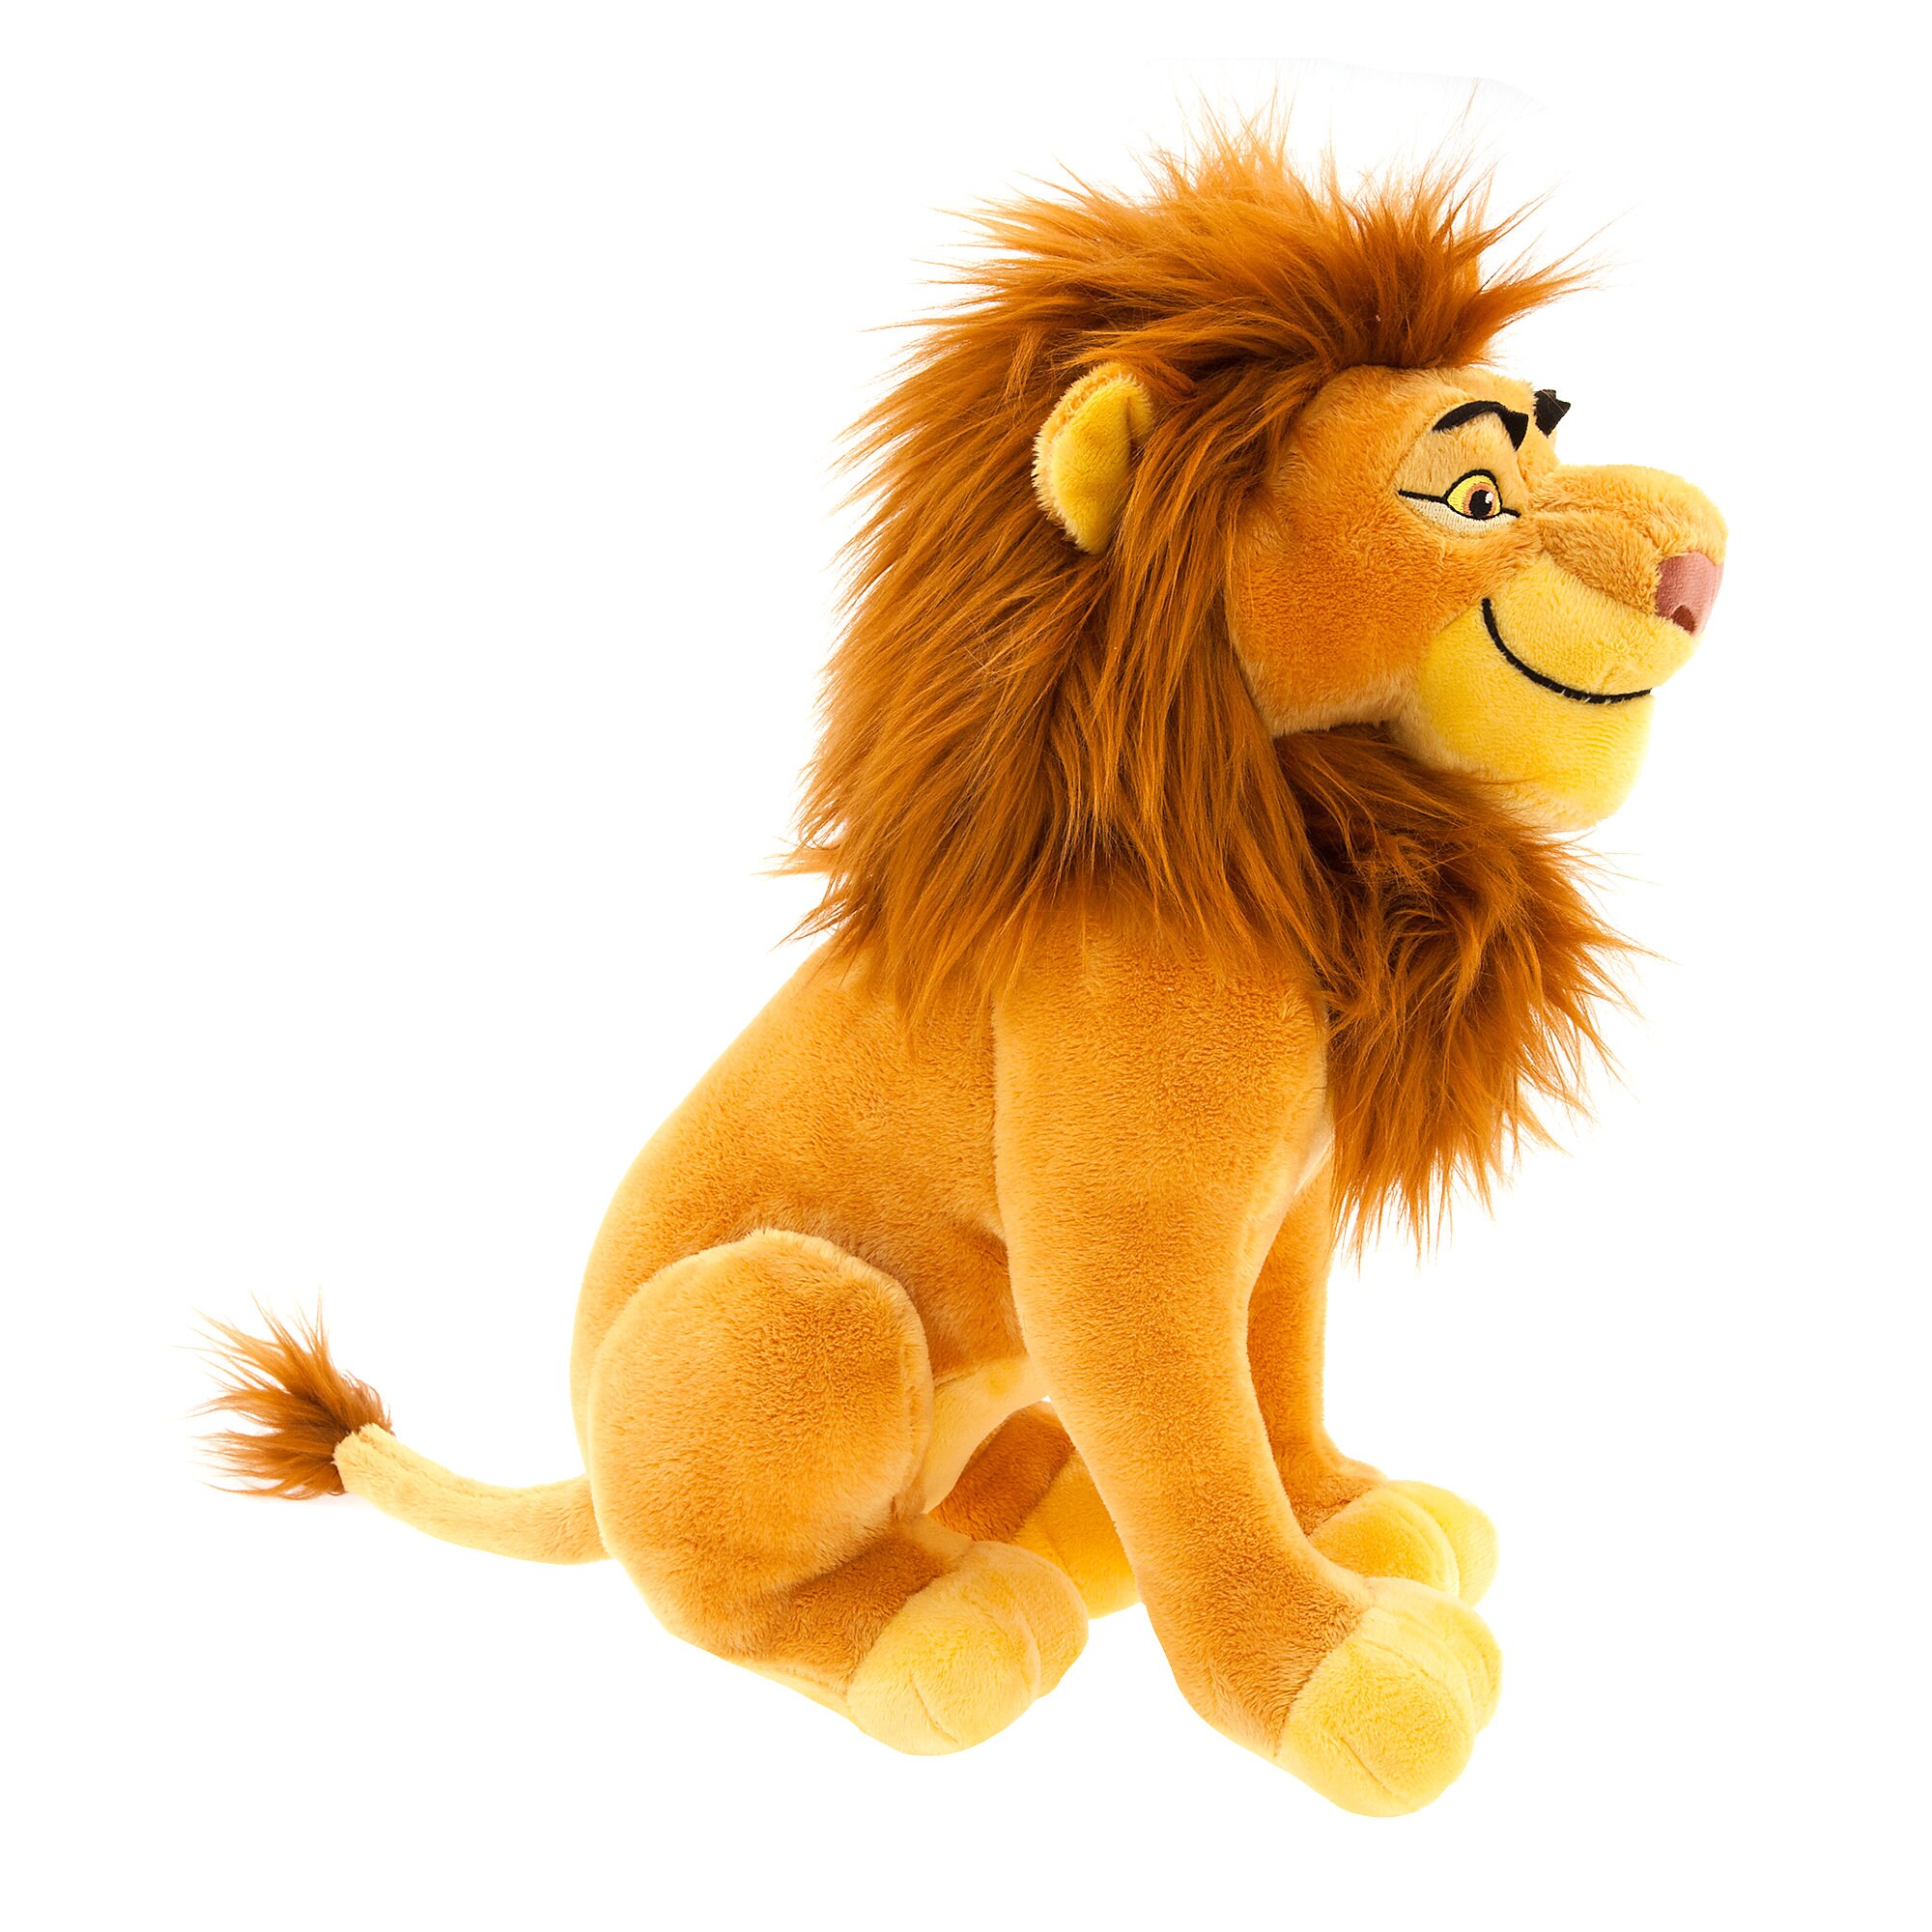 Mufasa Plush - The Lion King - Medium - 14''